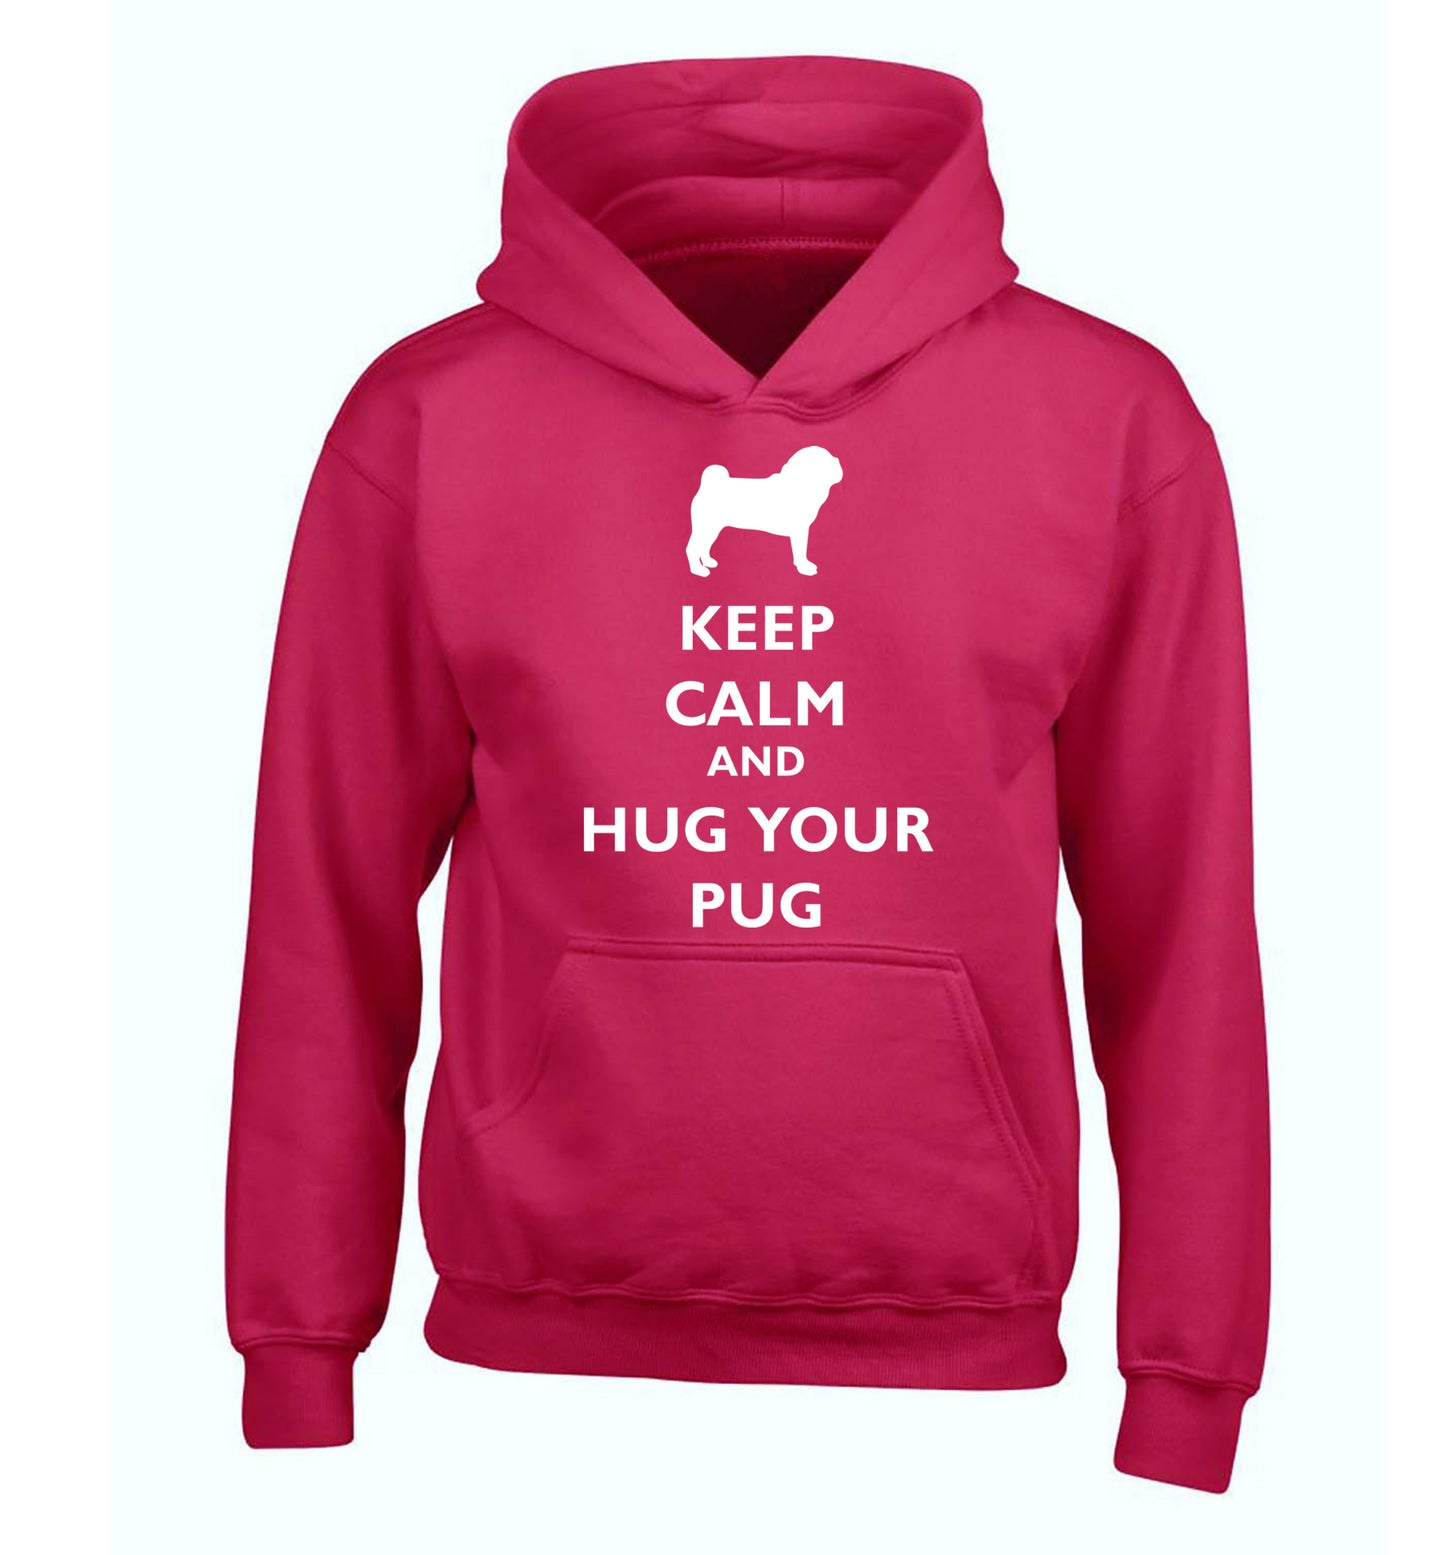 Keep calm and hug your pug children's pink hoodie 12-13 Years